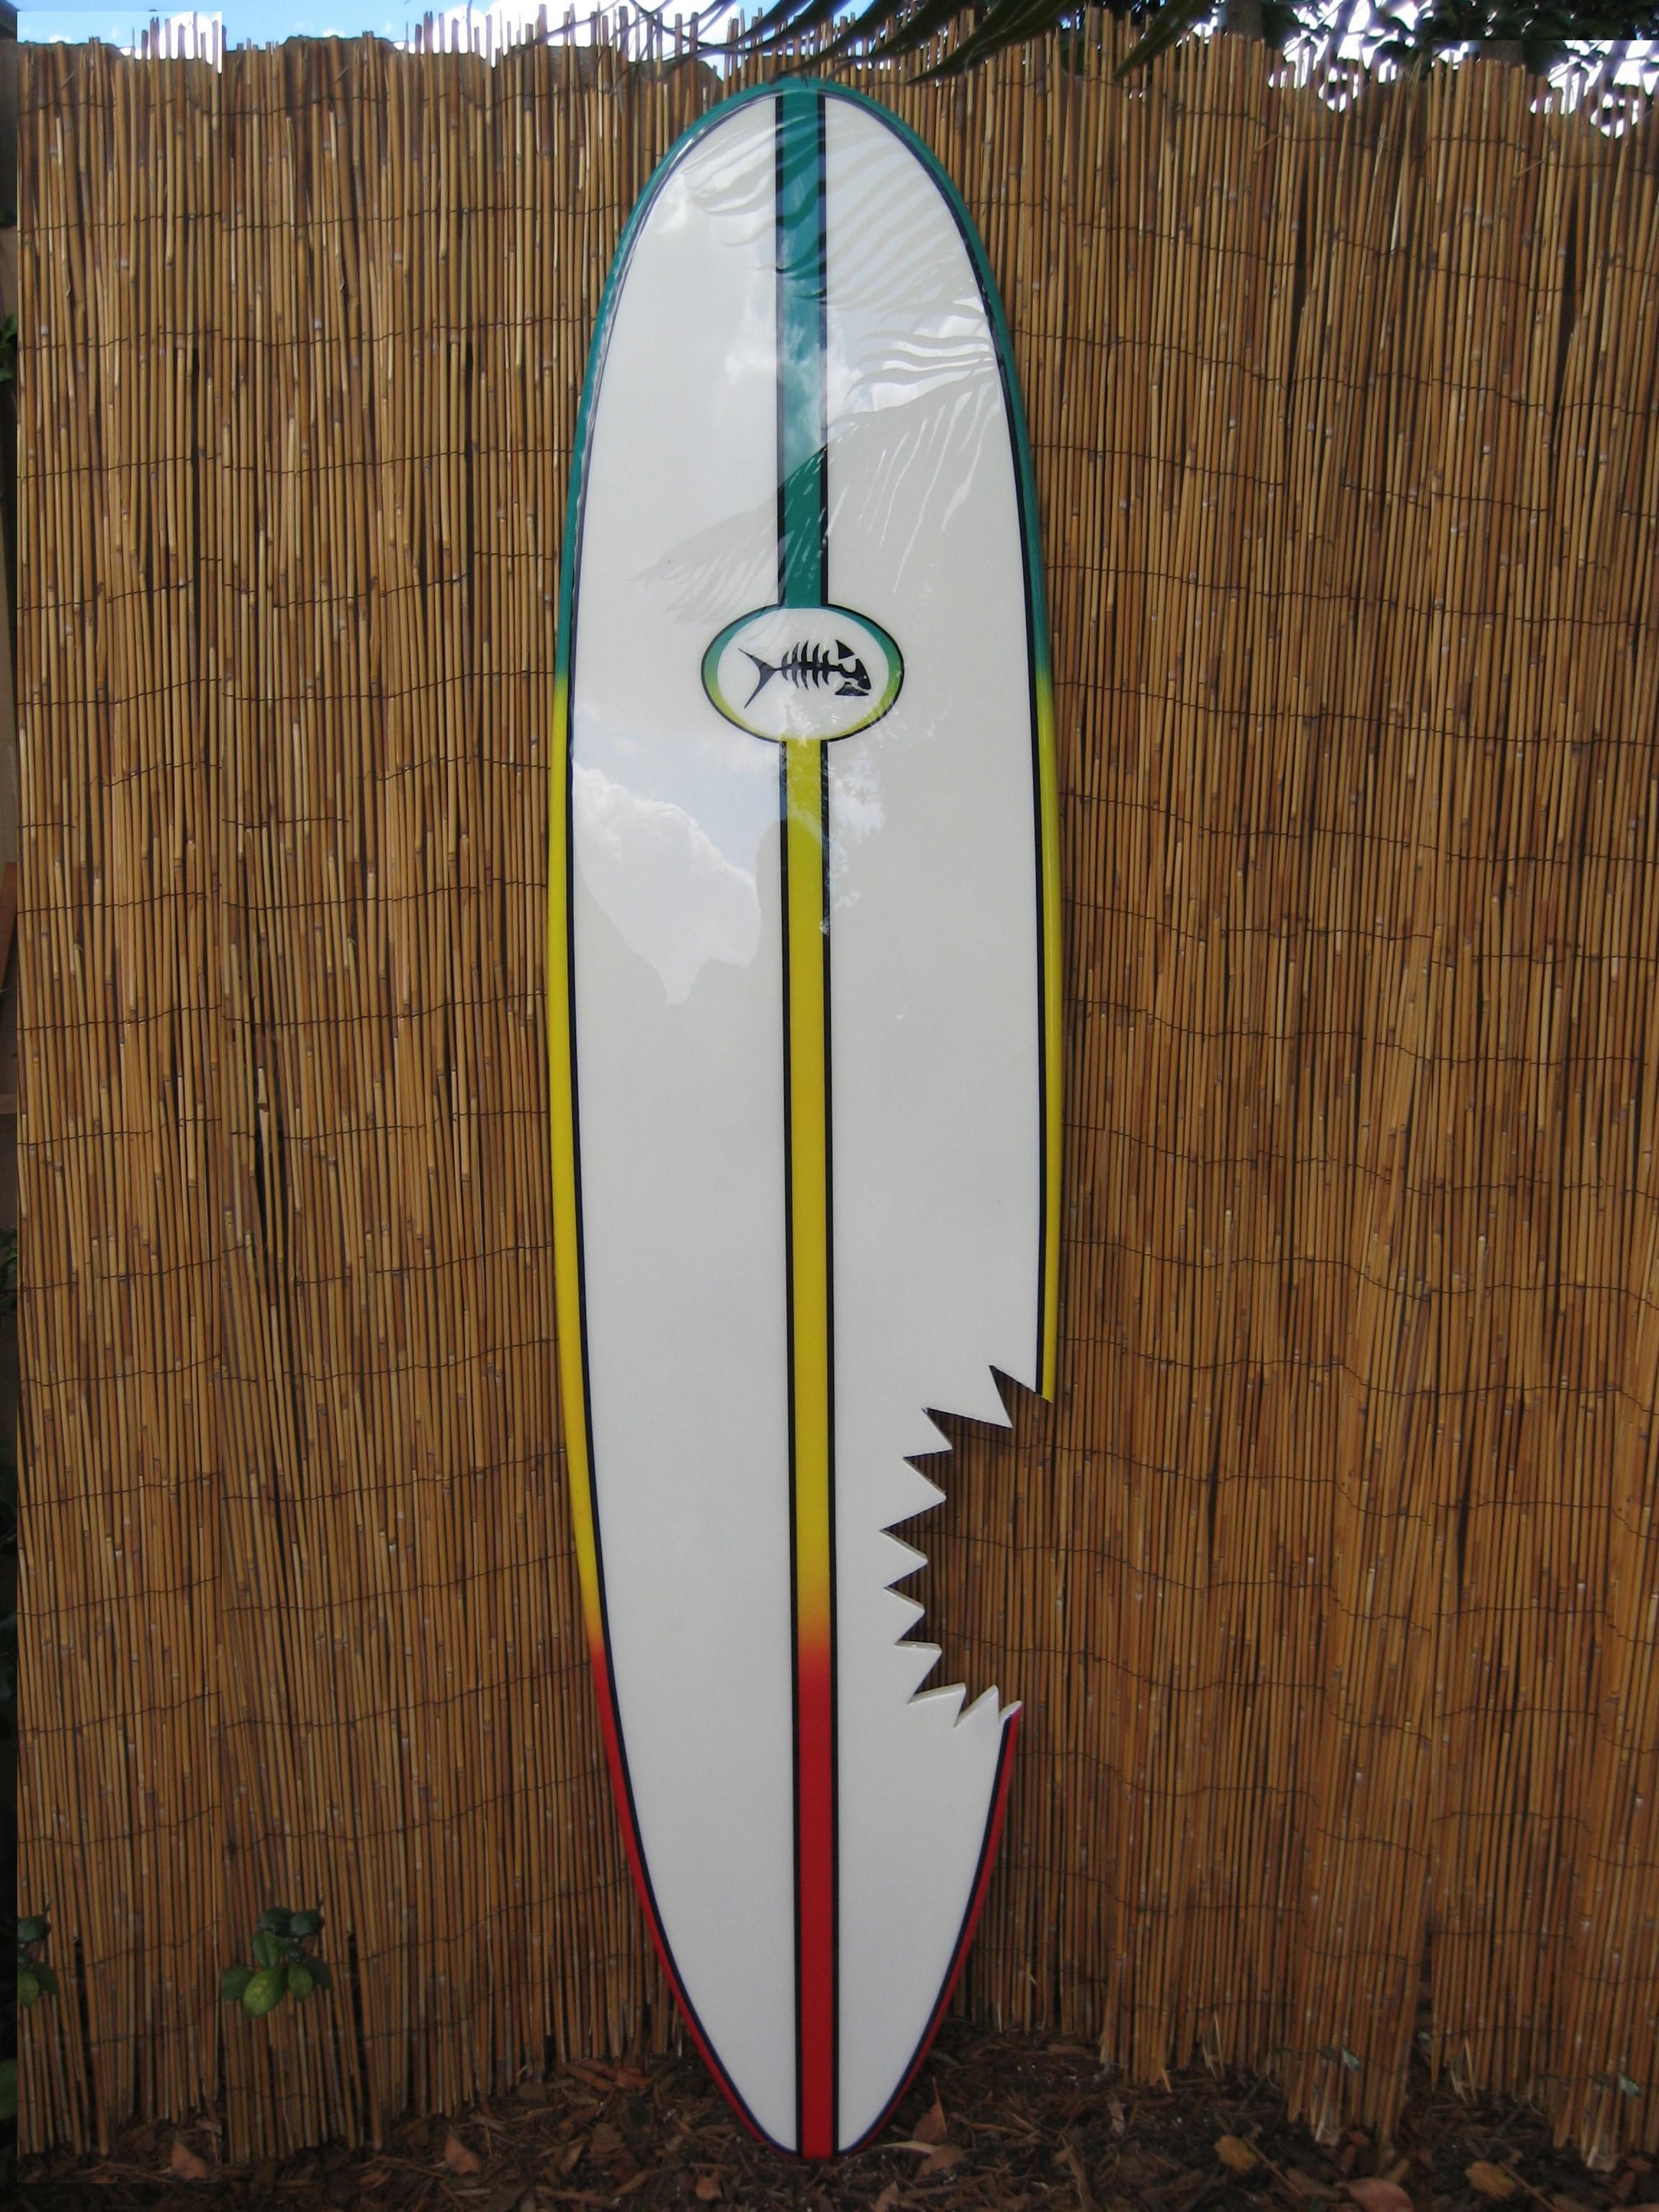 Decorative Wood Surfboard Art Wall Surf Surfboard Decor Inside Surf Board Wall Art (View 16 of 20)